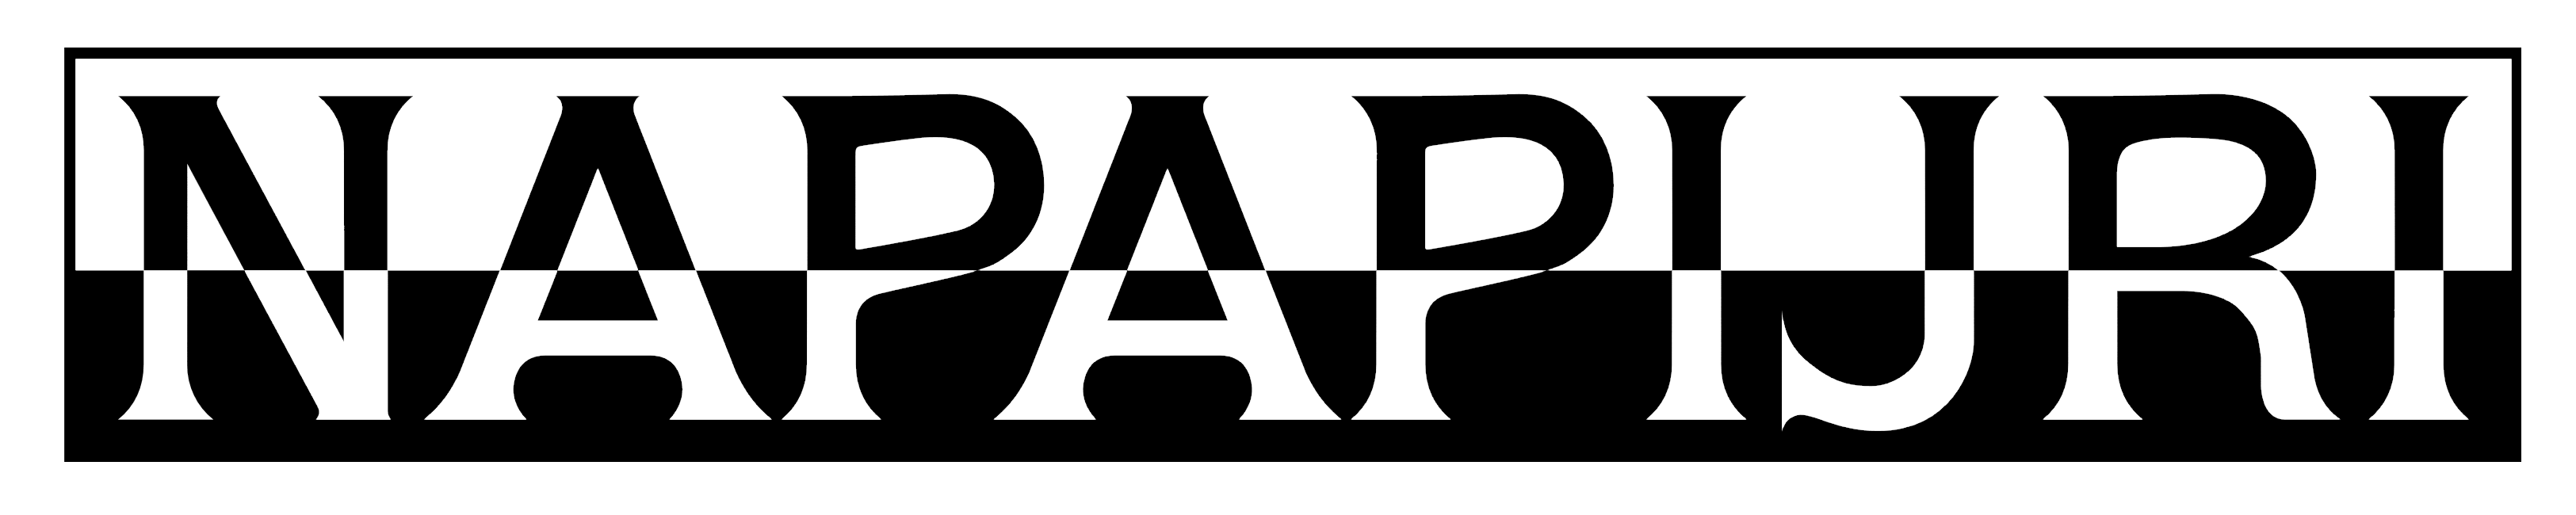 Napapijri Logo - Napapijri – Logos Download